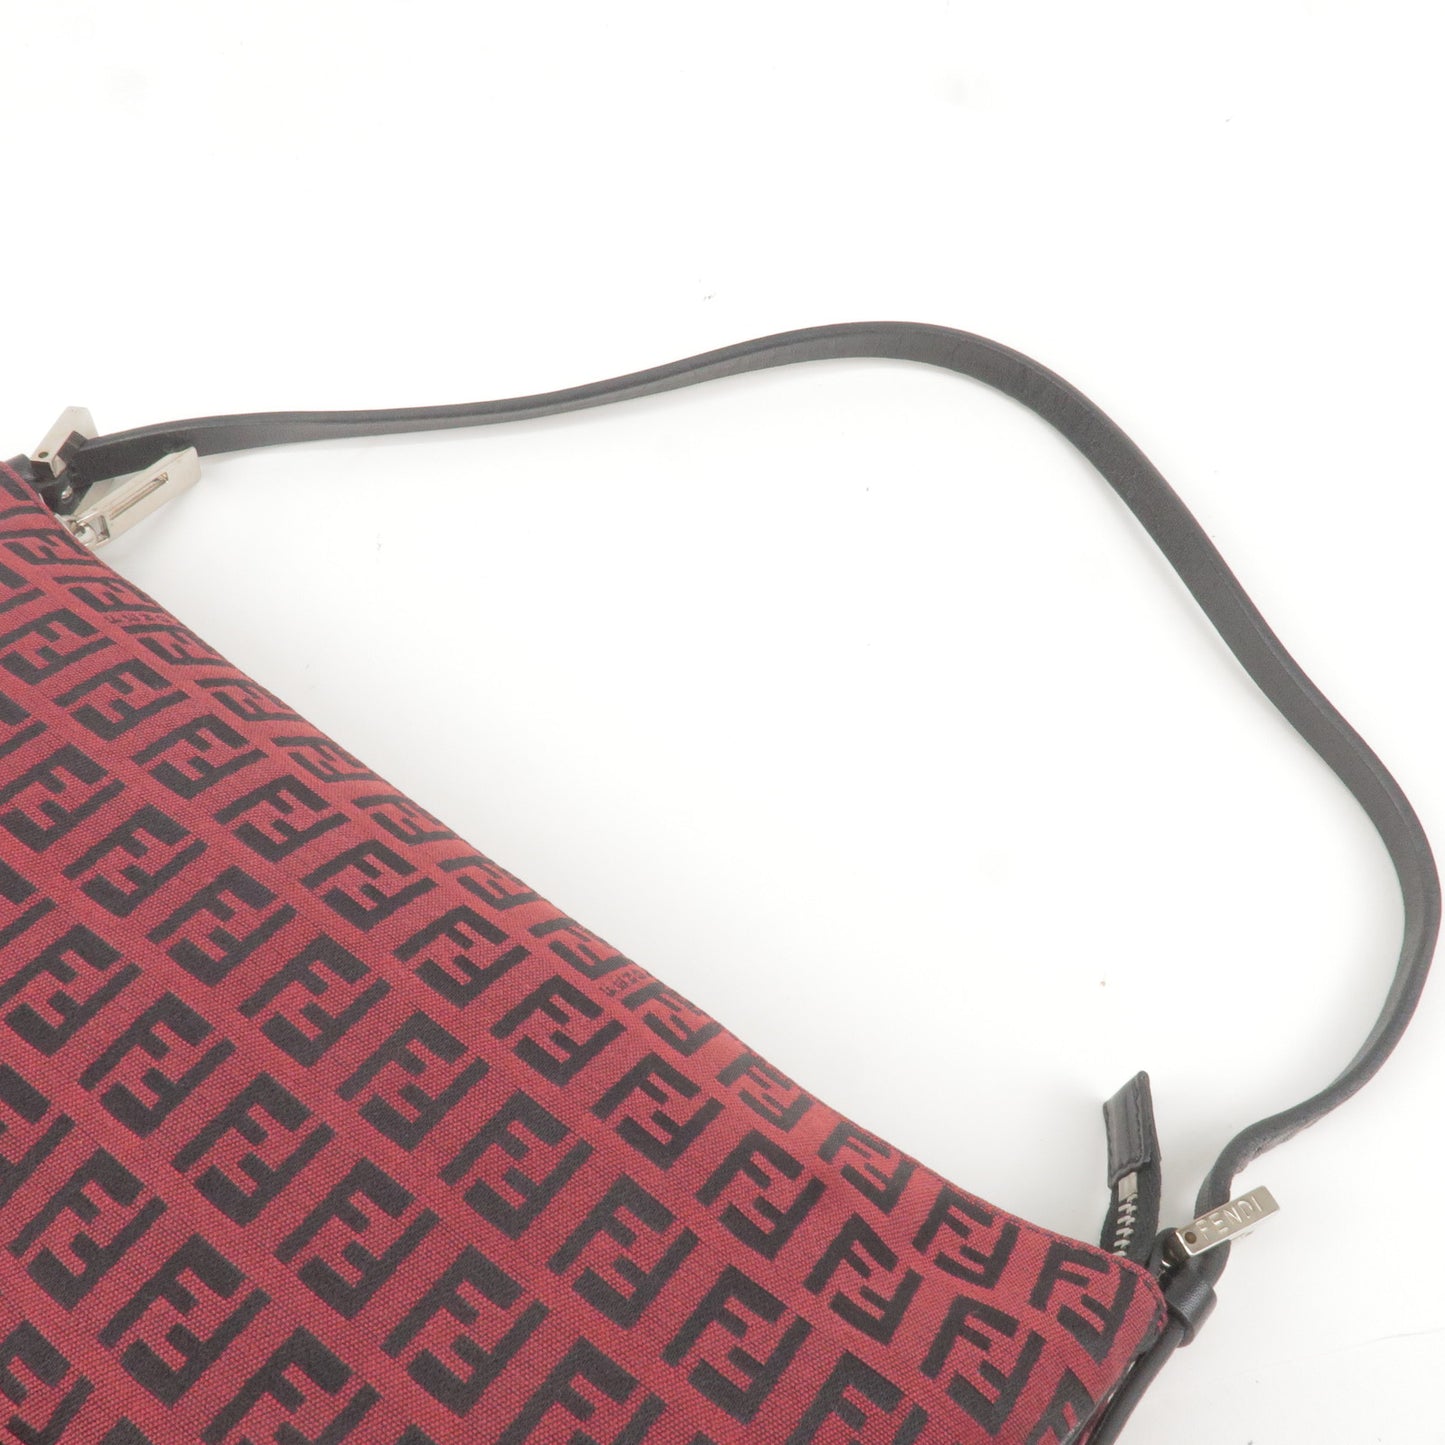 FENDI Zucchino Canvas Leather Shoulder Bag Red Black 8BR144